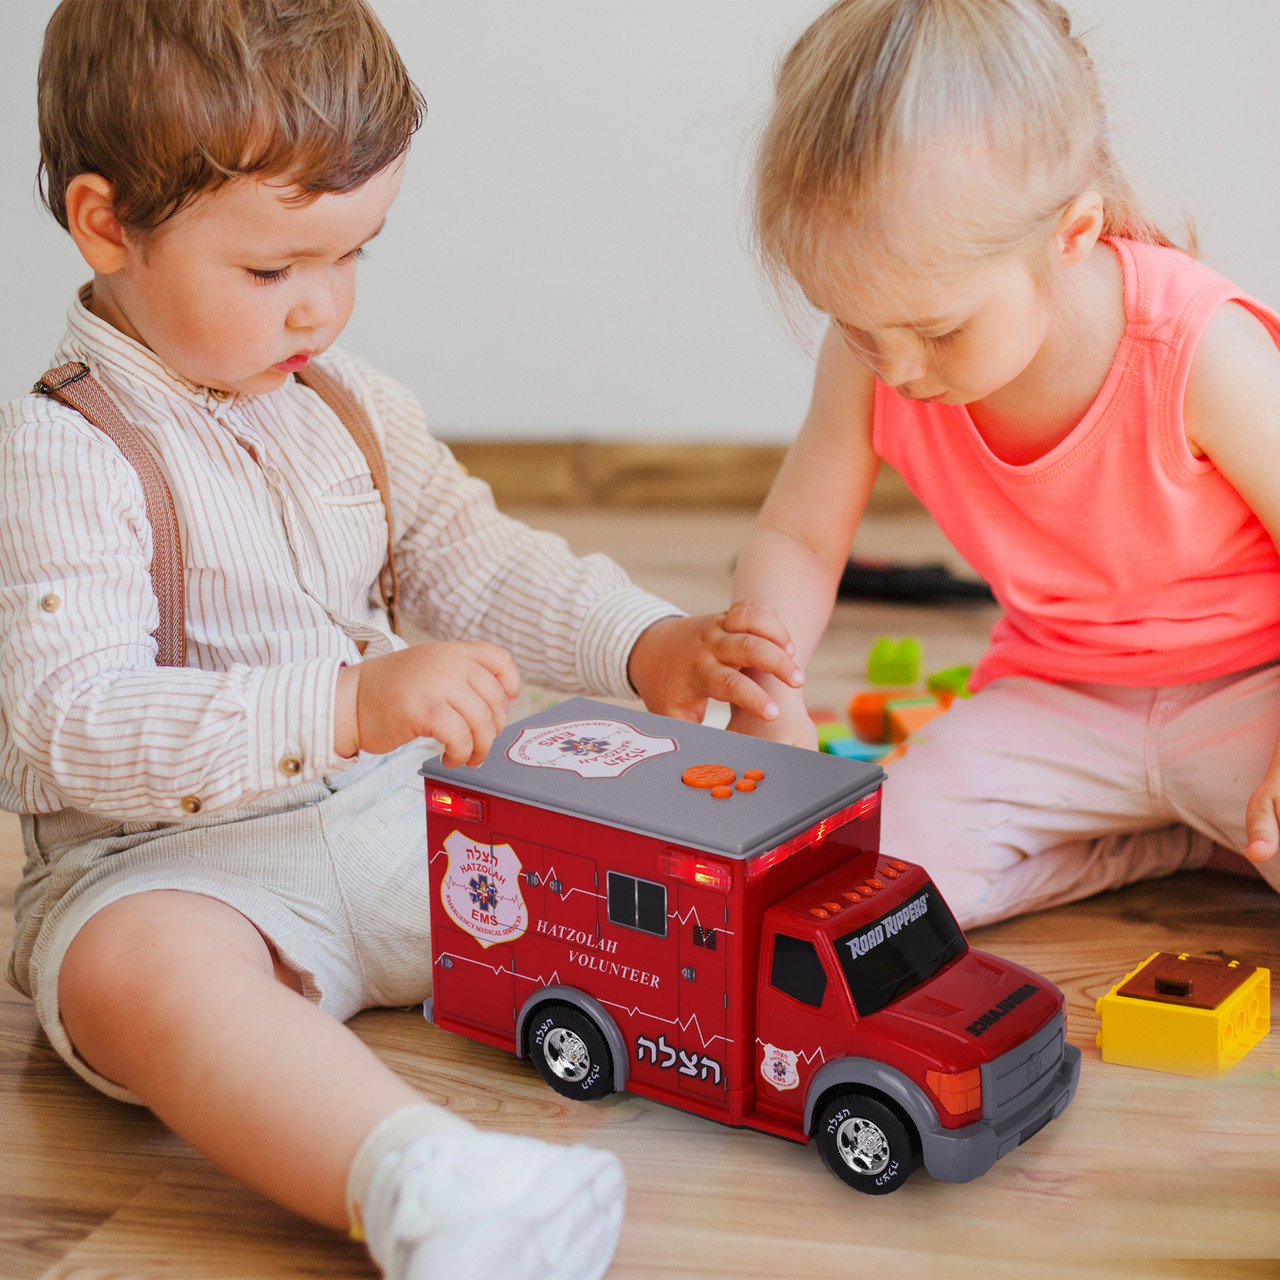 Rescue Ambulance - Playthings Toy Shoppe